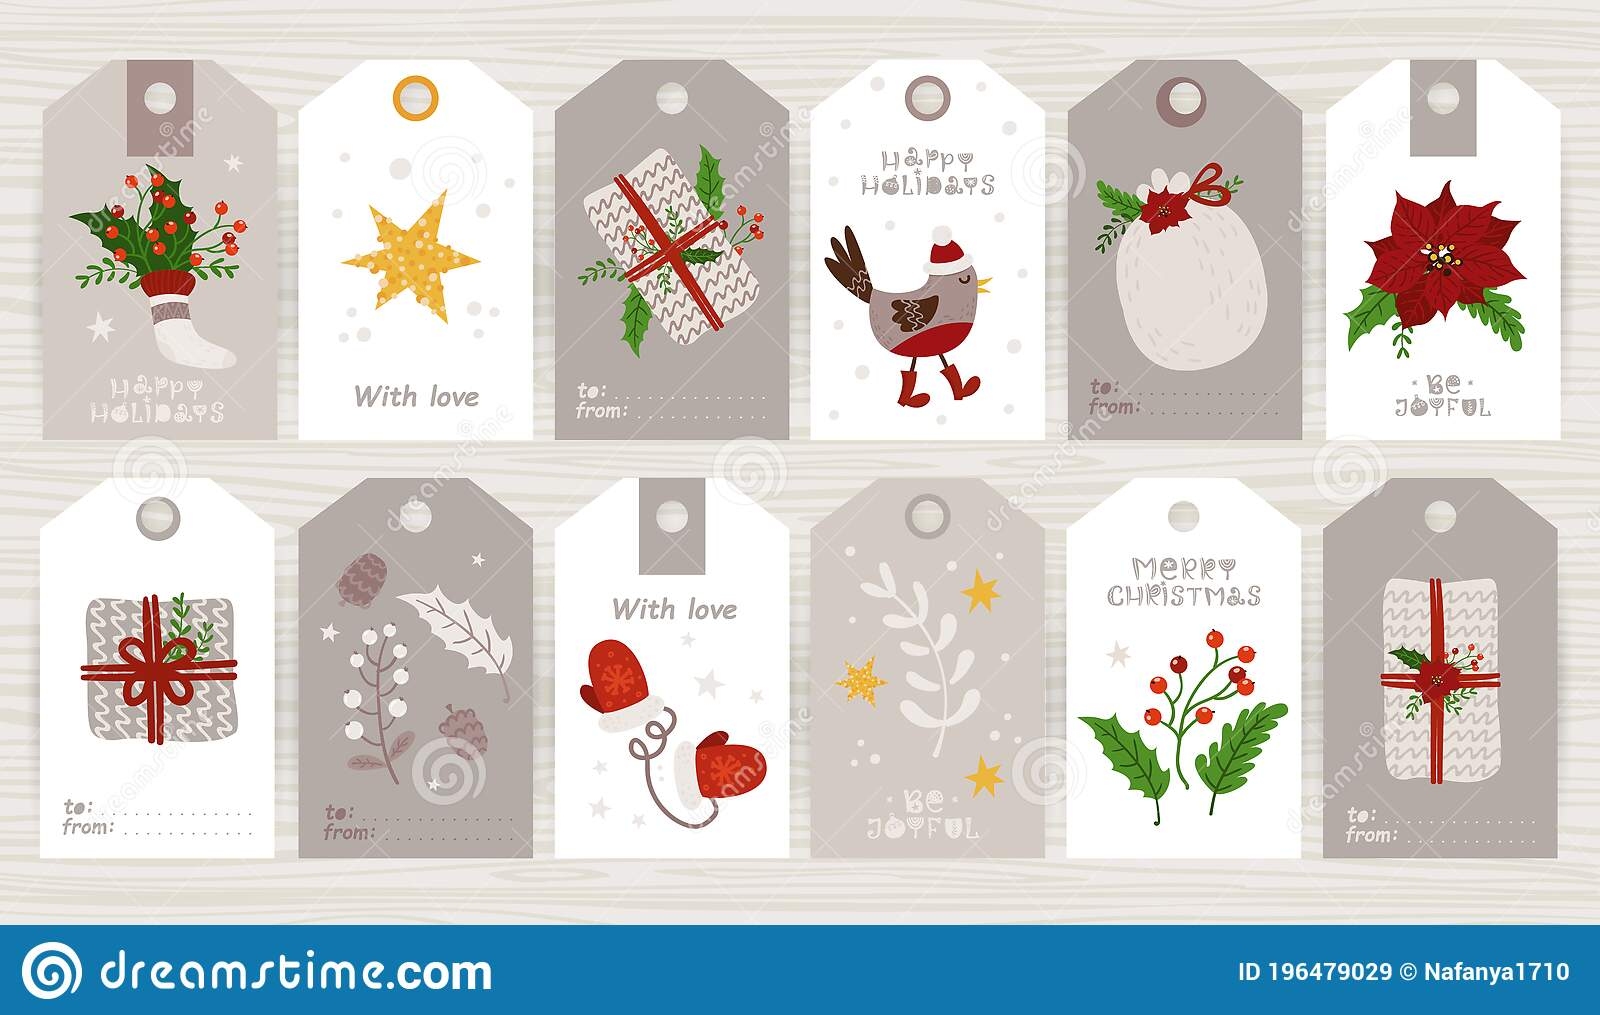 Printable Cute Christmas Card Template